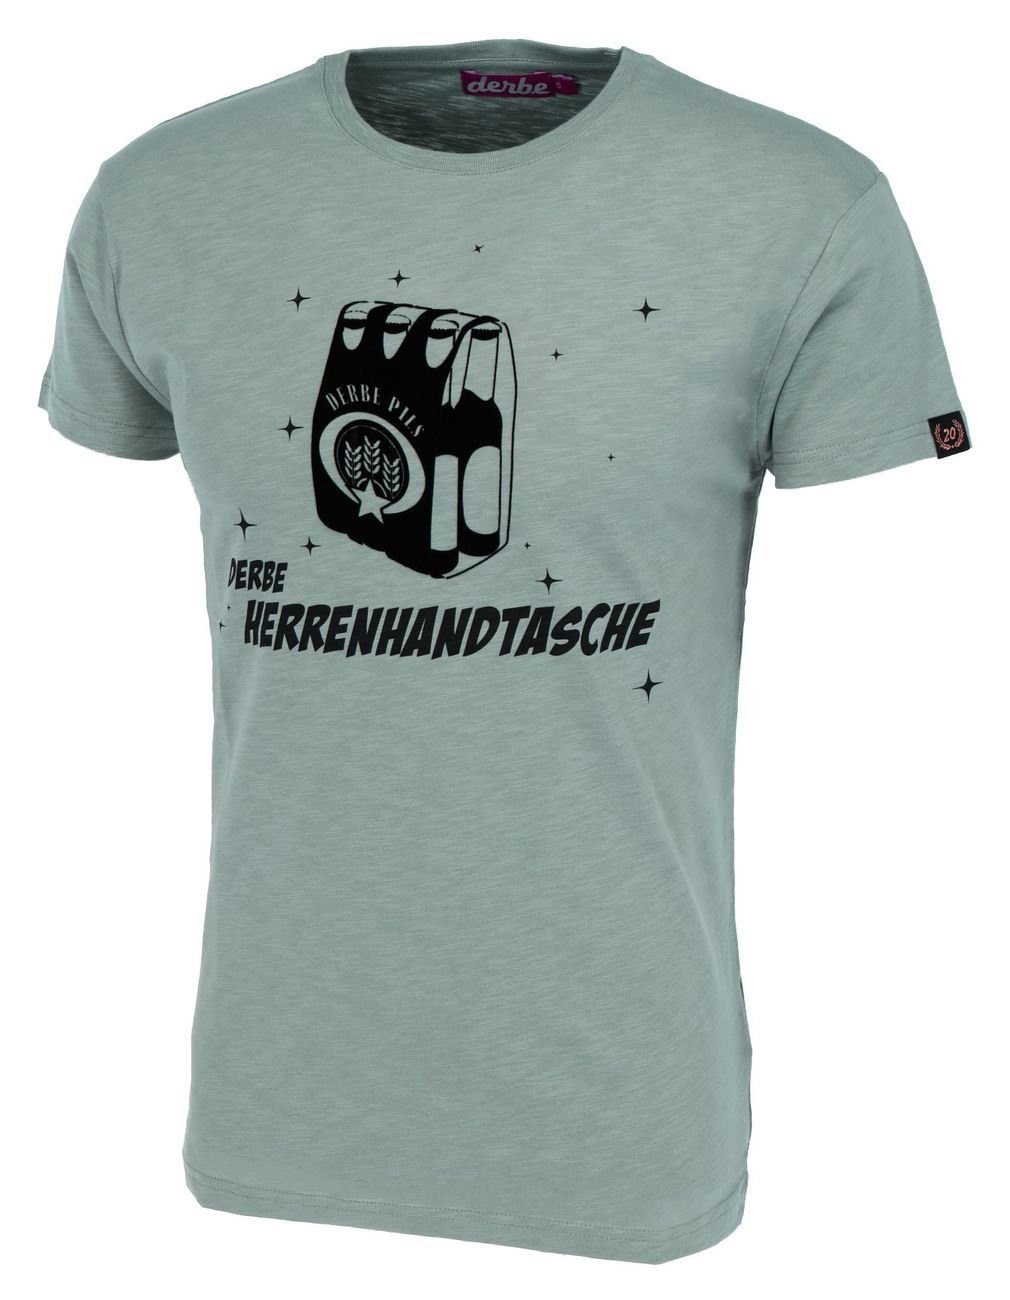 Derbe Print-Shirt Herrenhandtasche Quarry